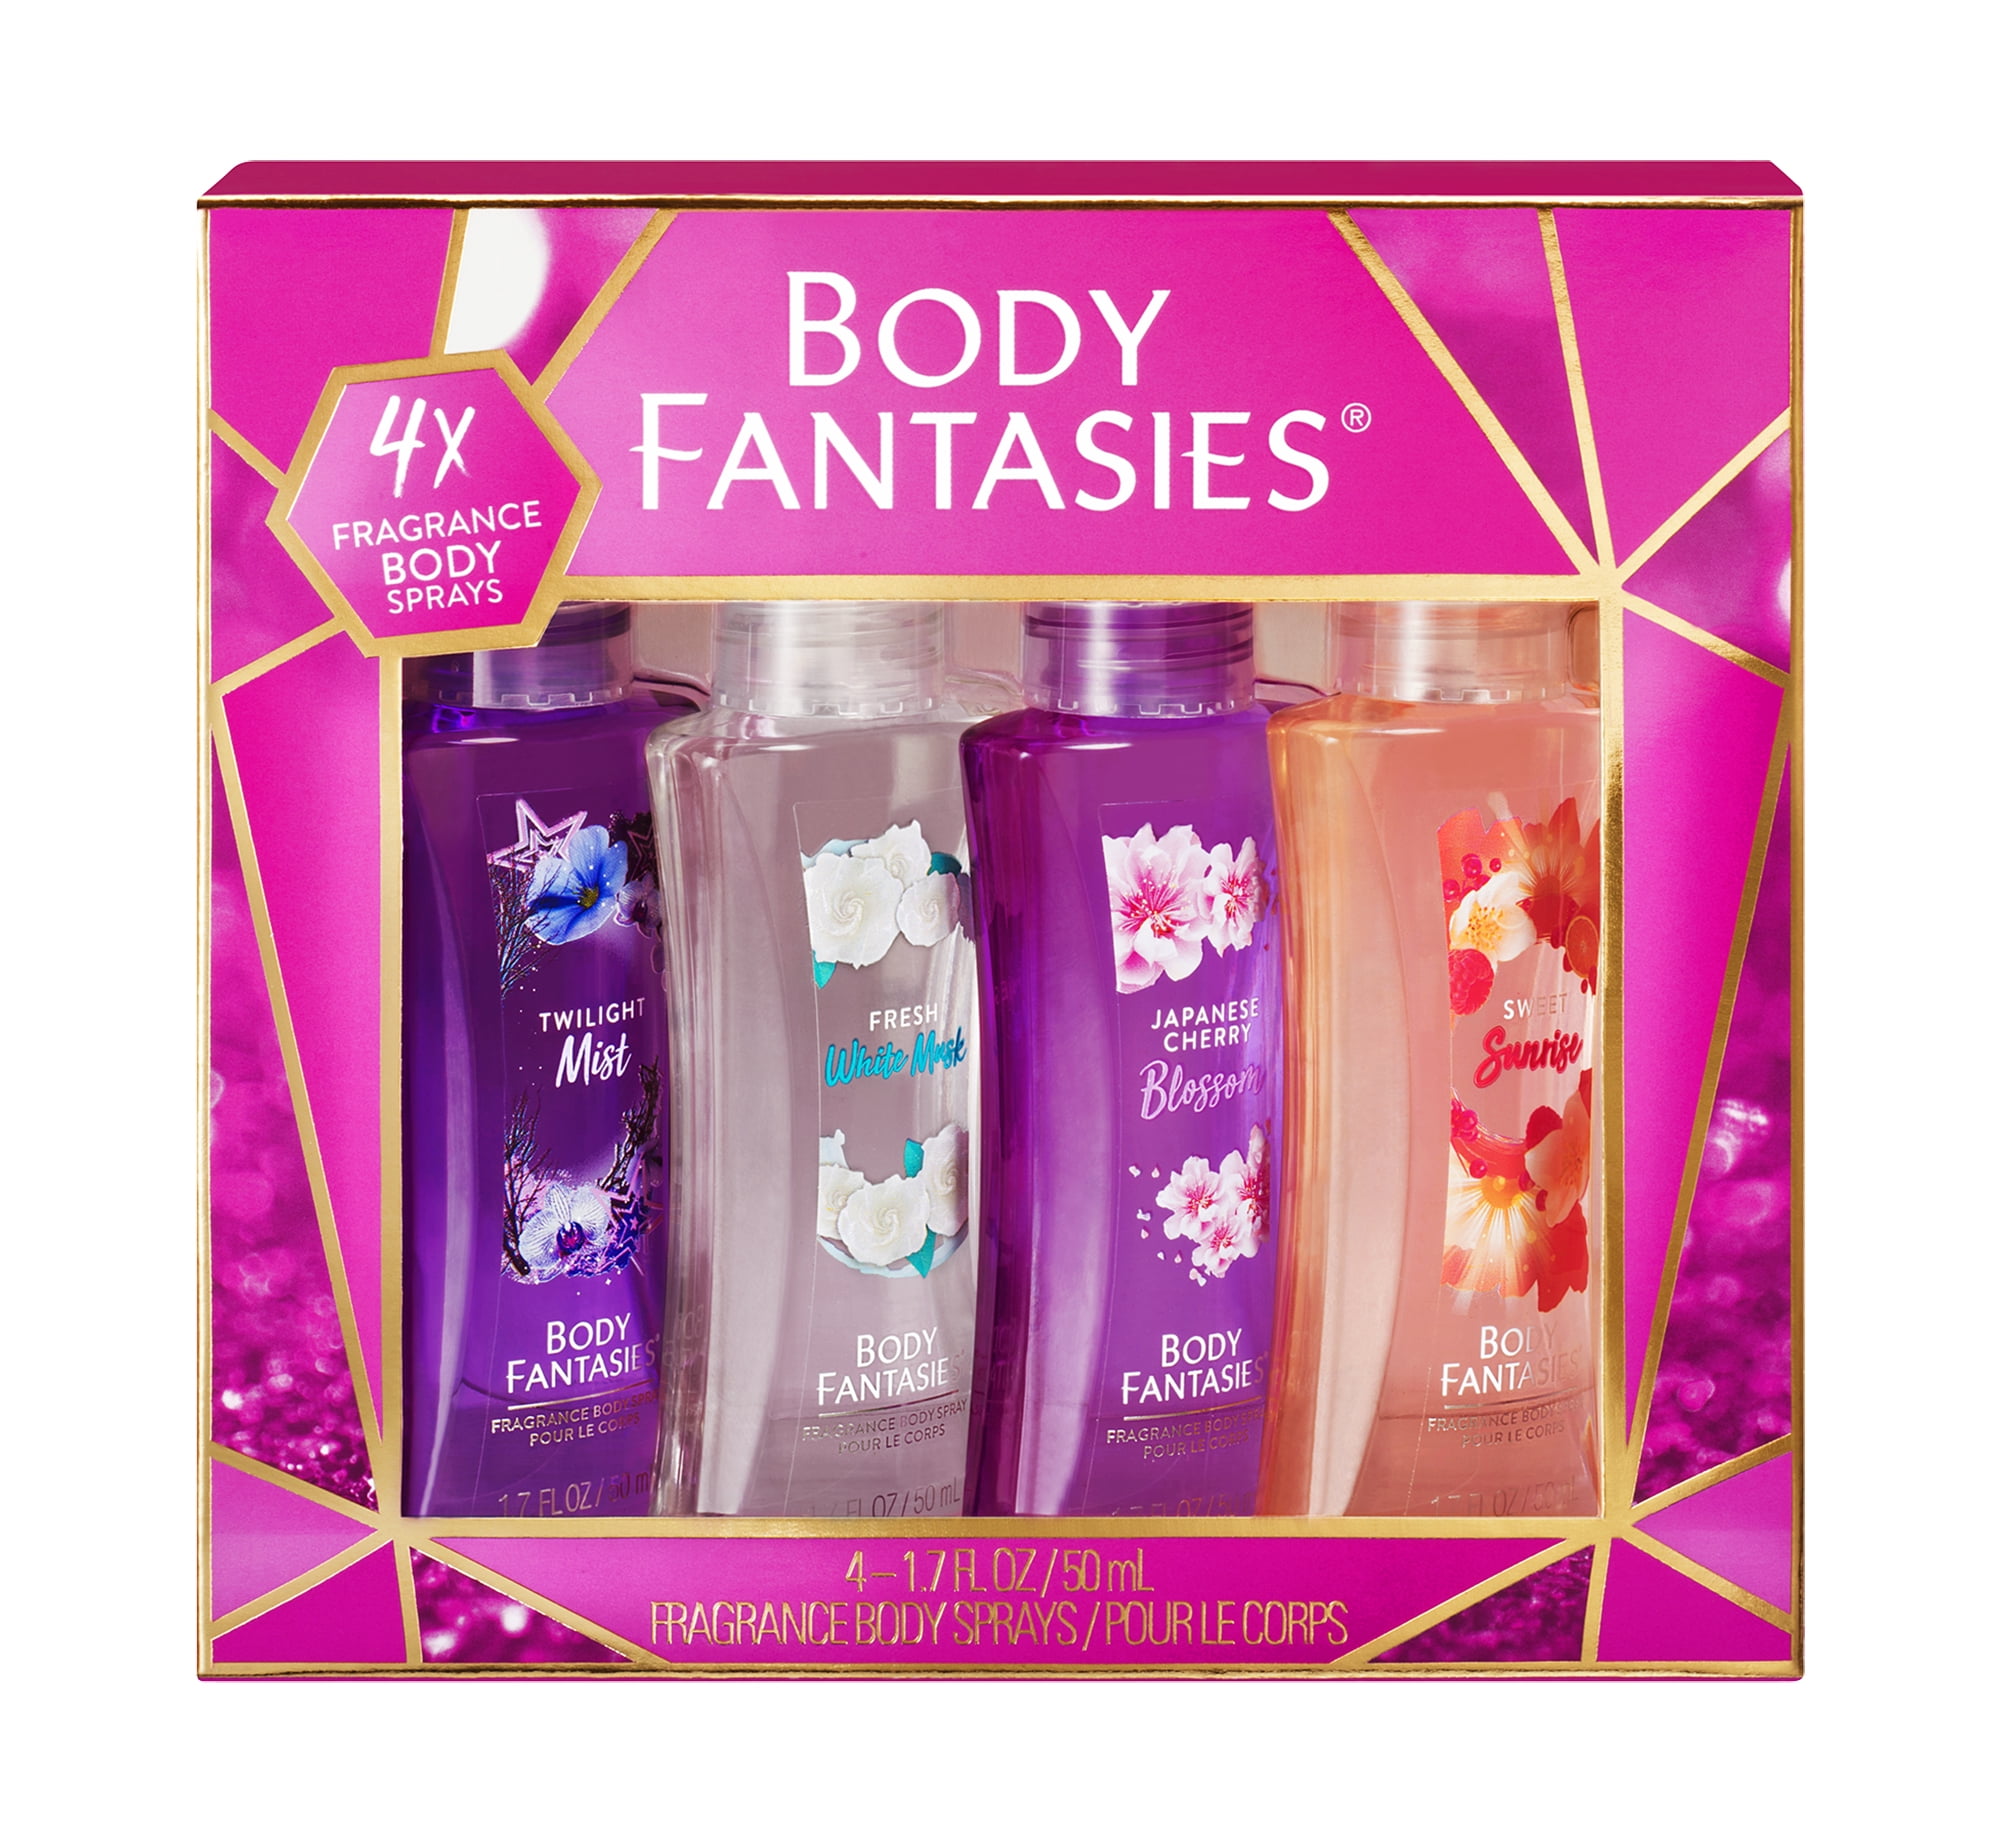 Body Fantasies Signature Fragrance Body Spray Gift Set, 1.7 fl oz, 4 Count